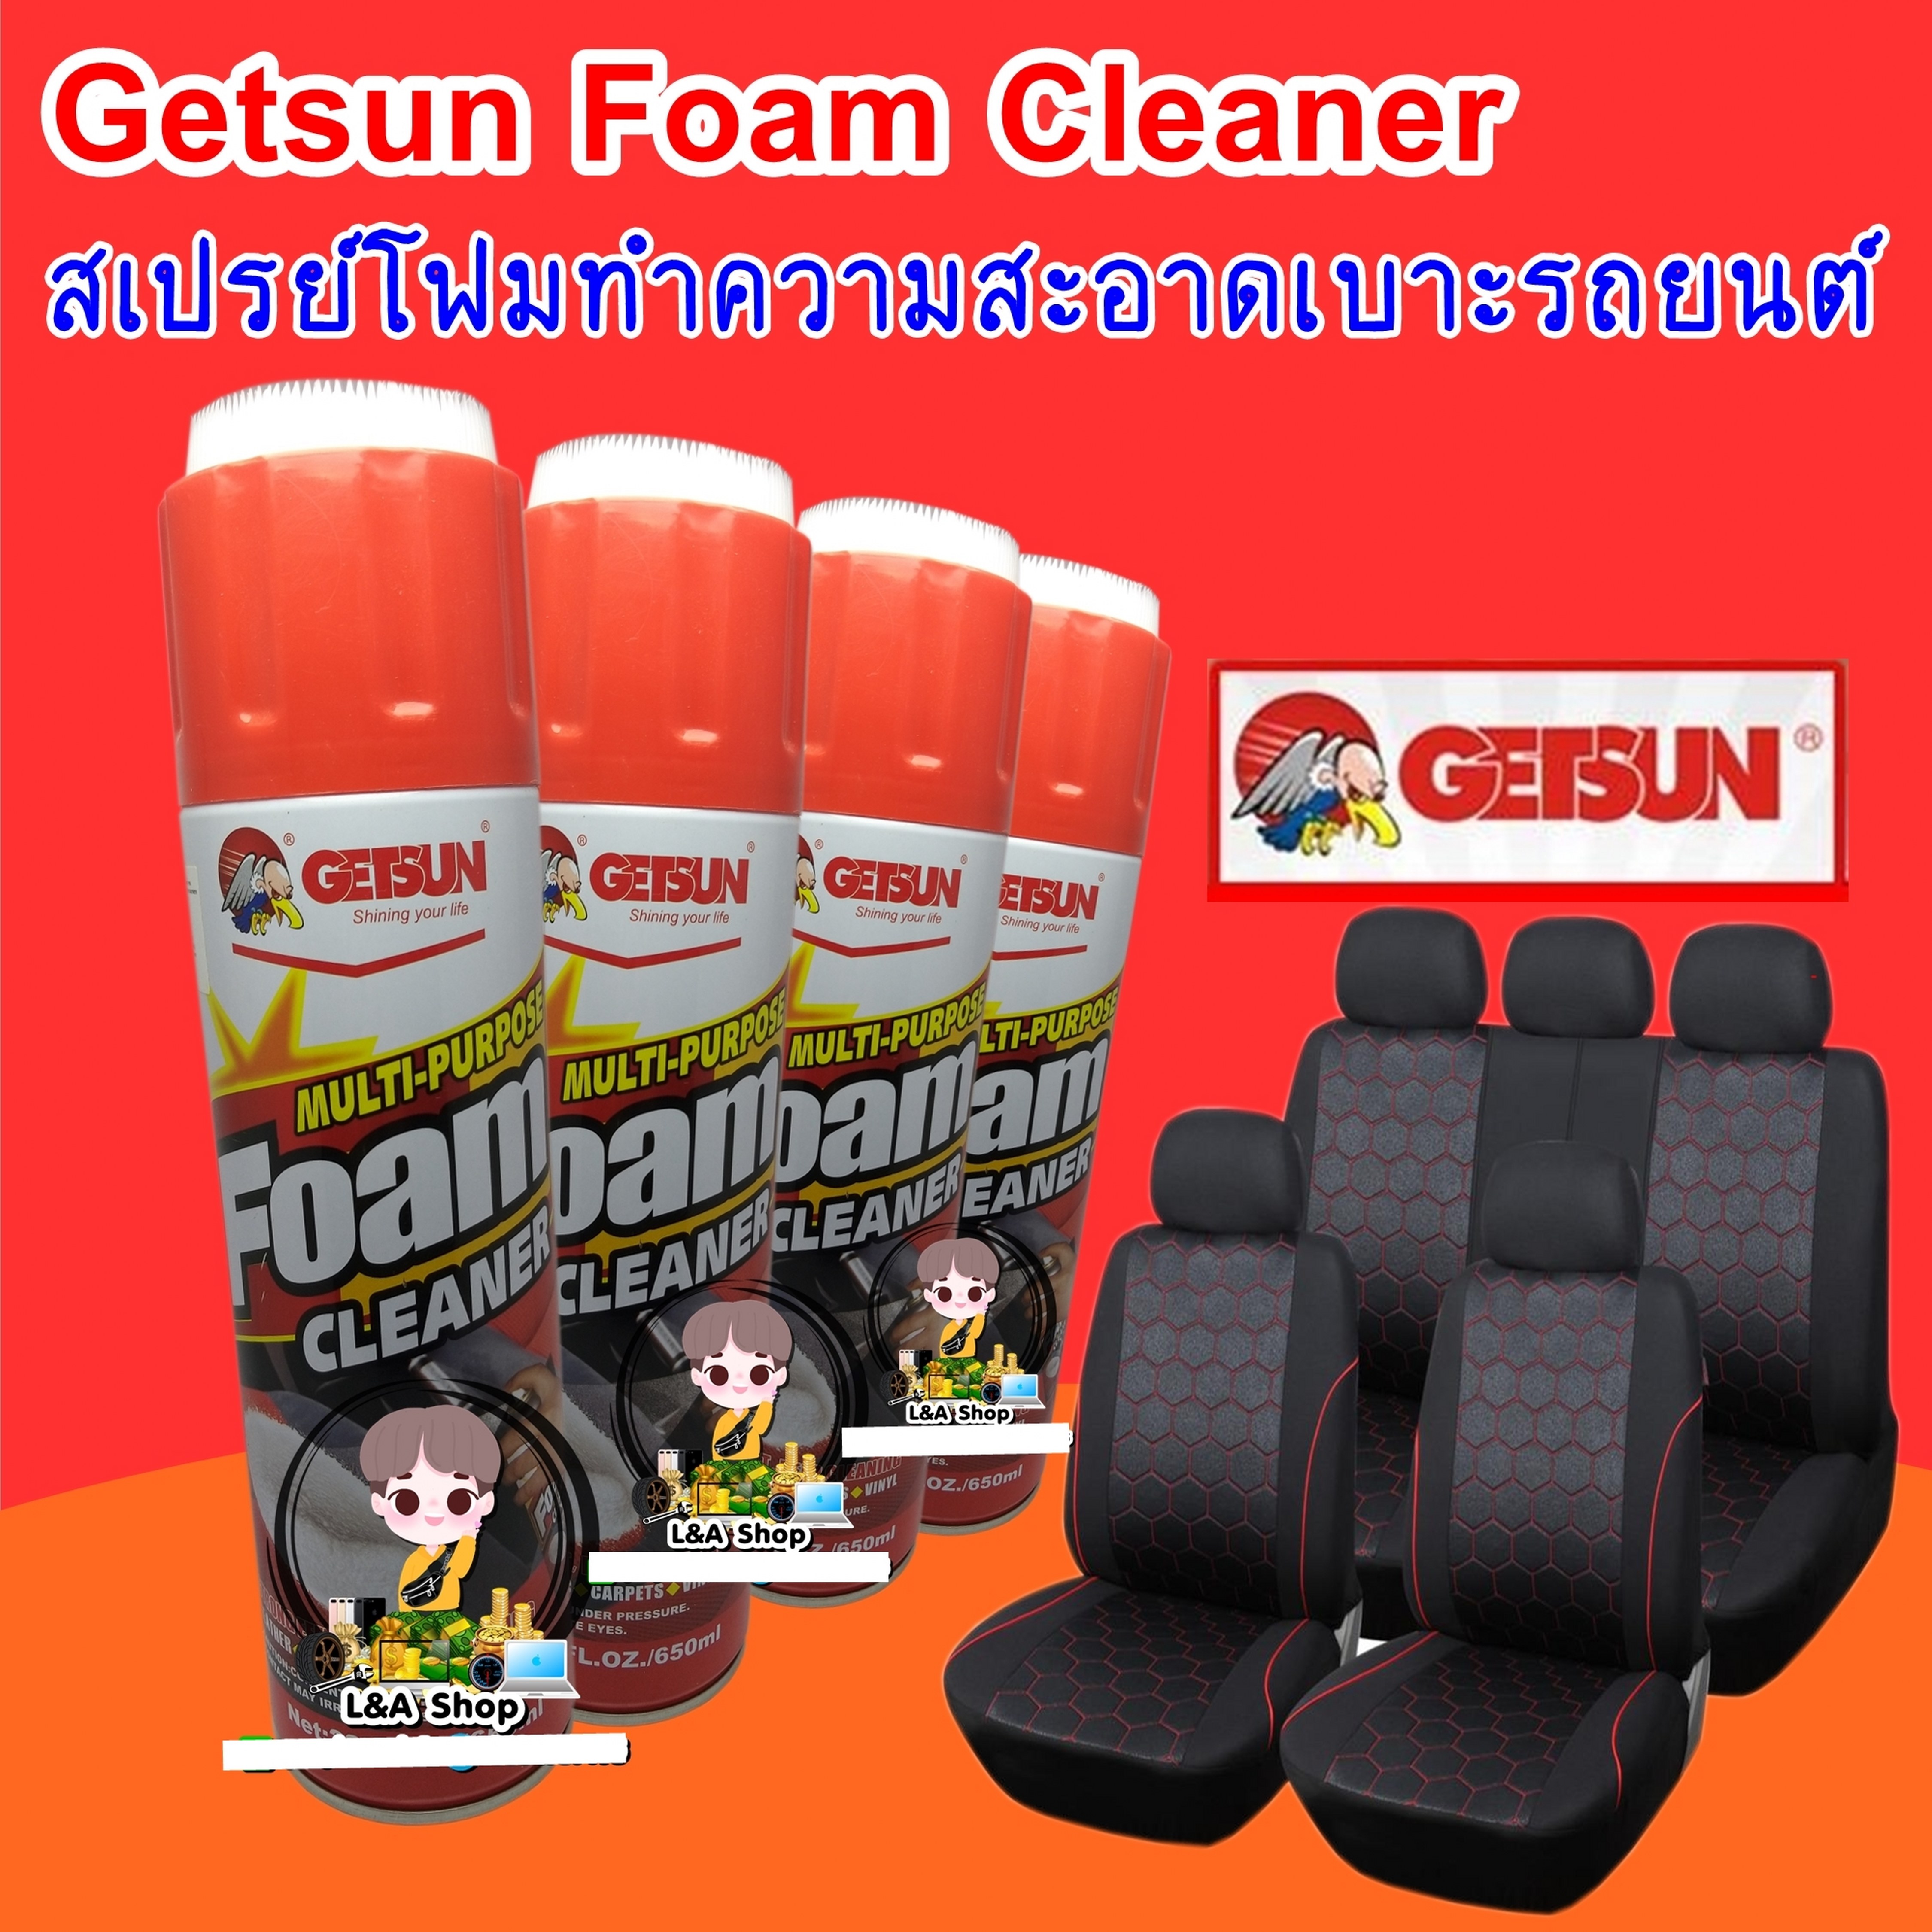 Getsun Foam Cleaner โฟมทำความสะอาดเบาะรถยนต์ ผ้า พรม ไวนิล ซับในกระเป๋า รองเท้า ต่างๆ ขนาด 650ML